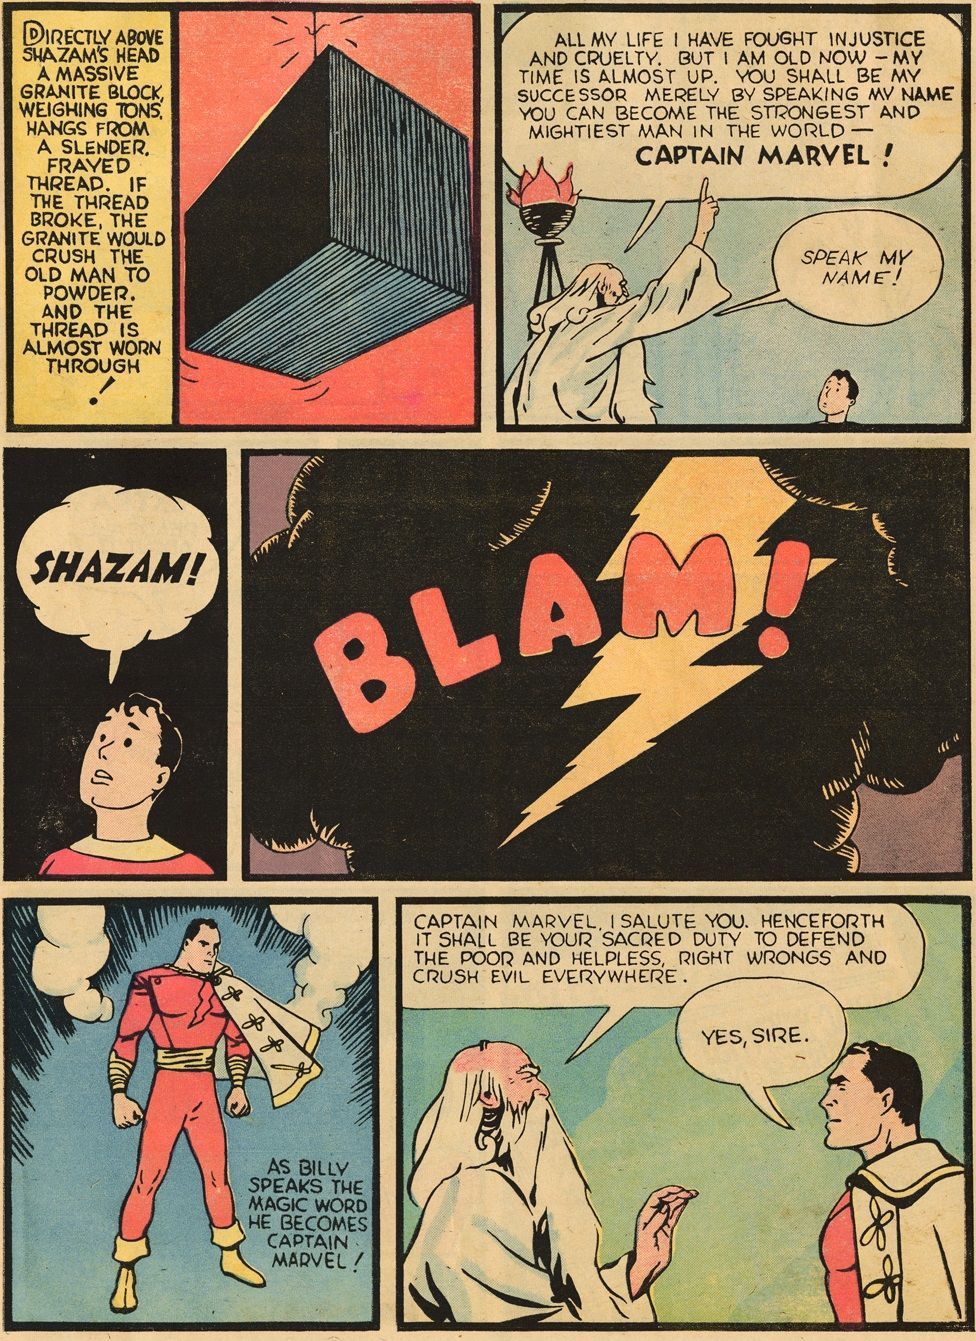 Shazam และ Billy Batson กลายเป็นคนเดียวกันเมื่อใด